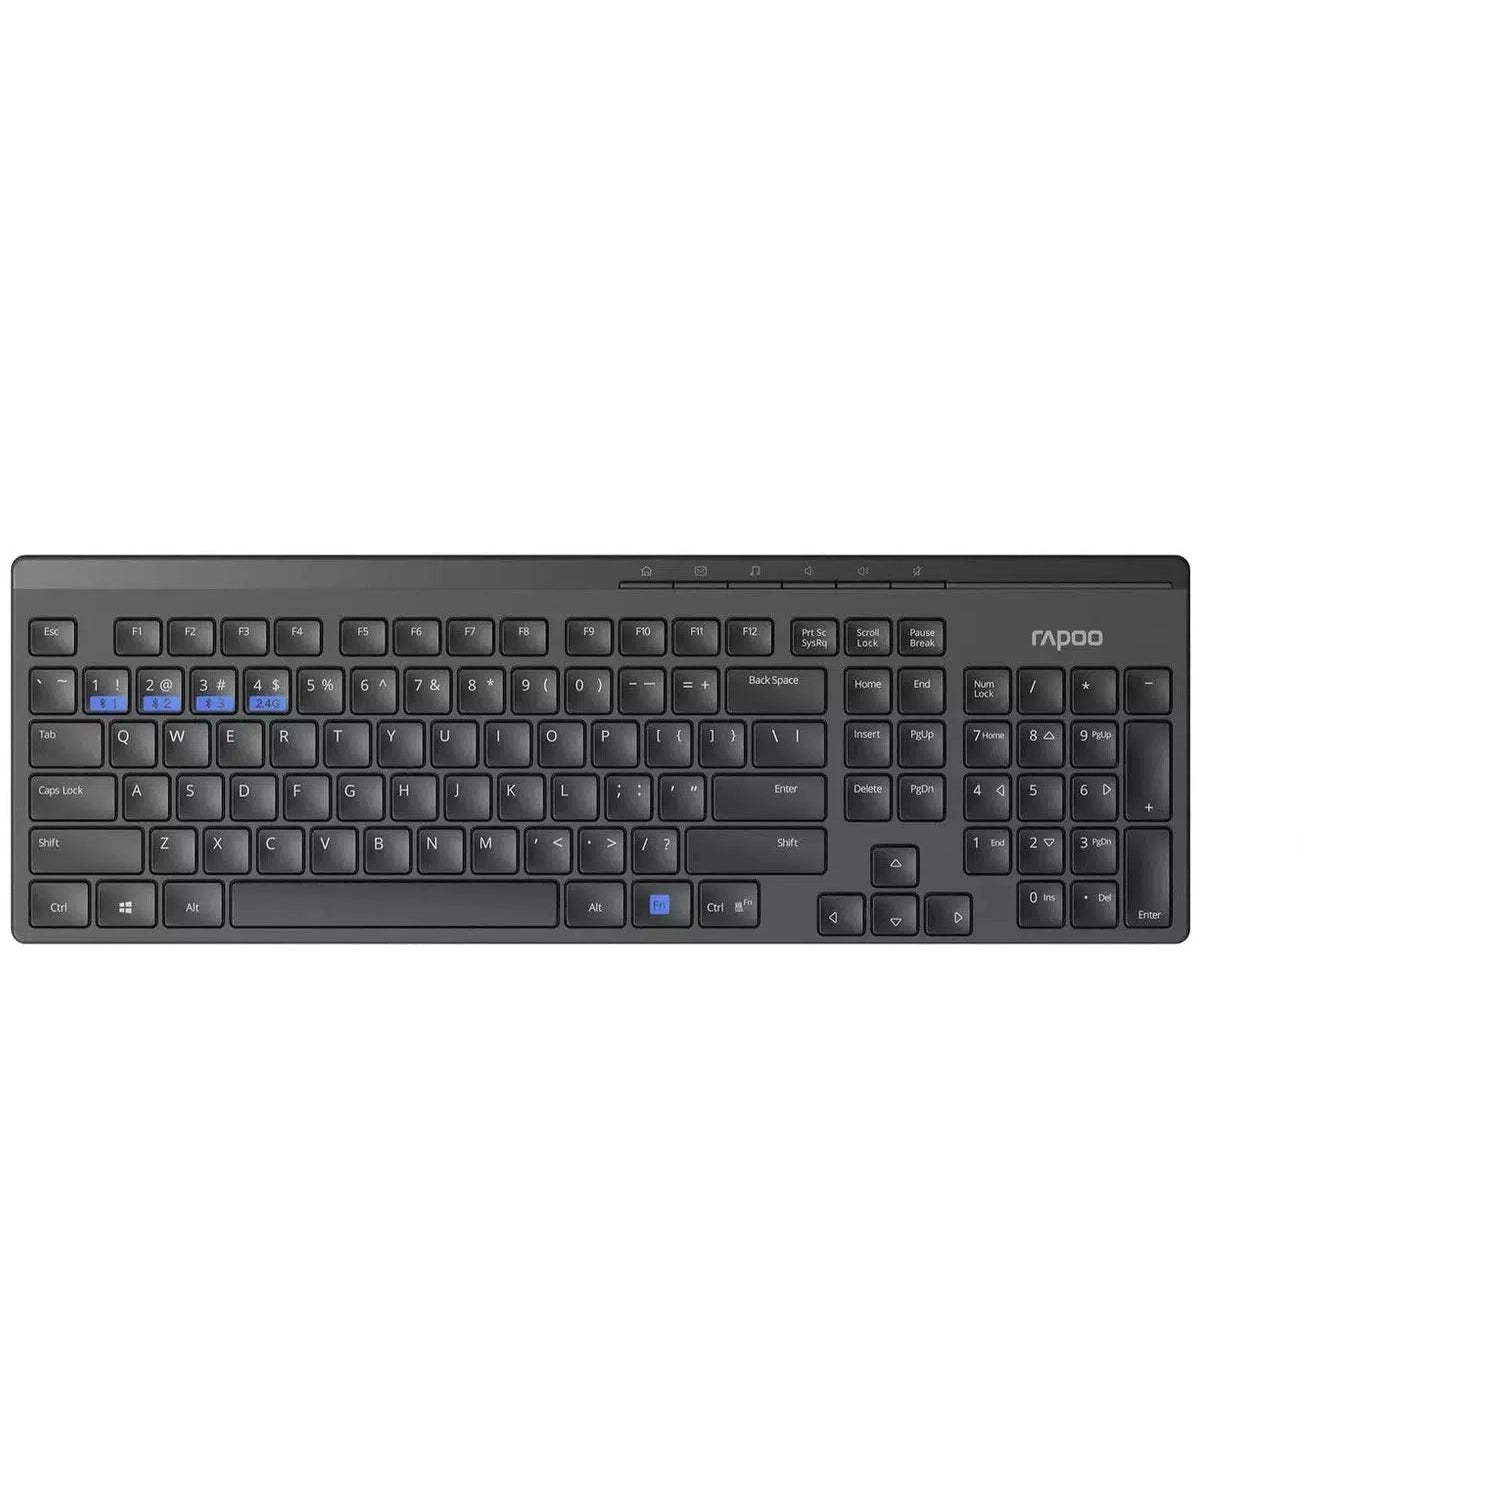 Rapoo 8100M Multi-Mode Wireless Mouse and Keyboard, Black - Refurbished Pristine